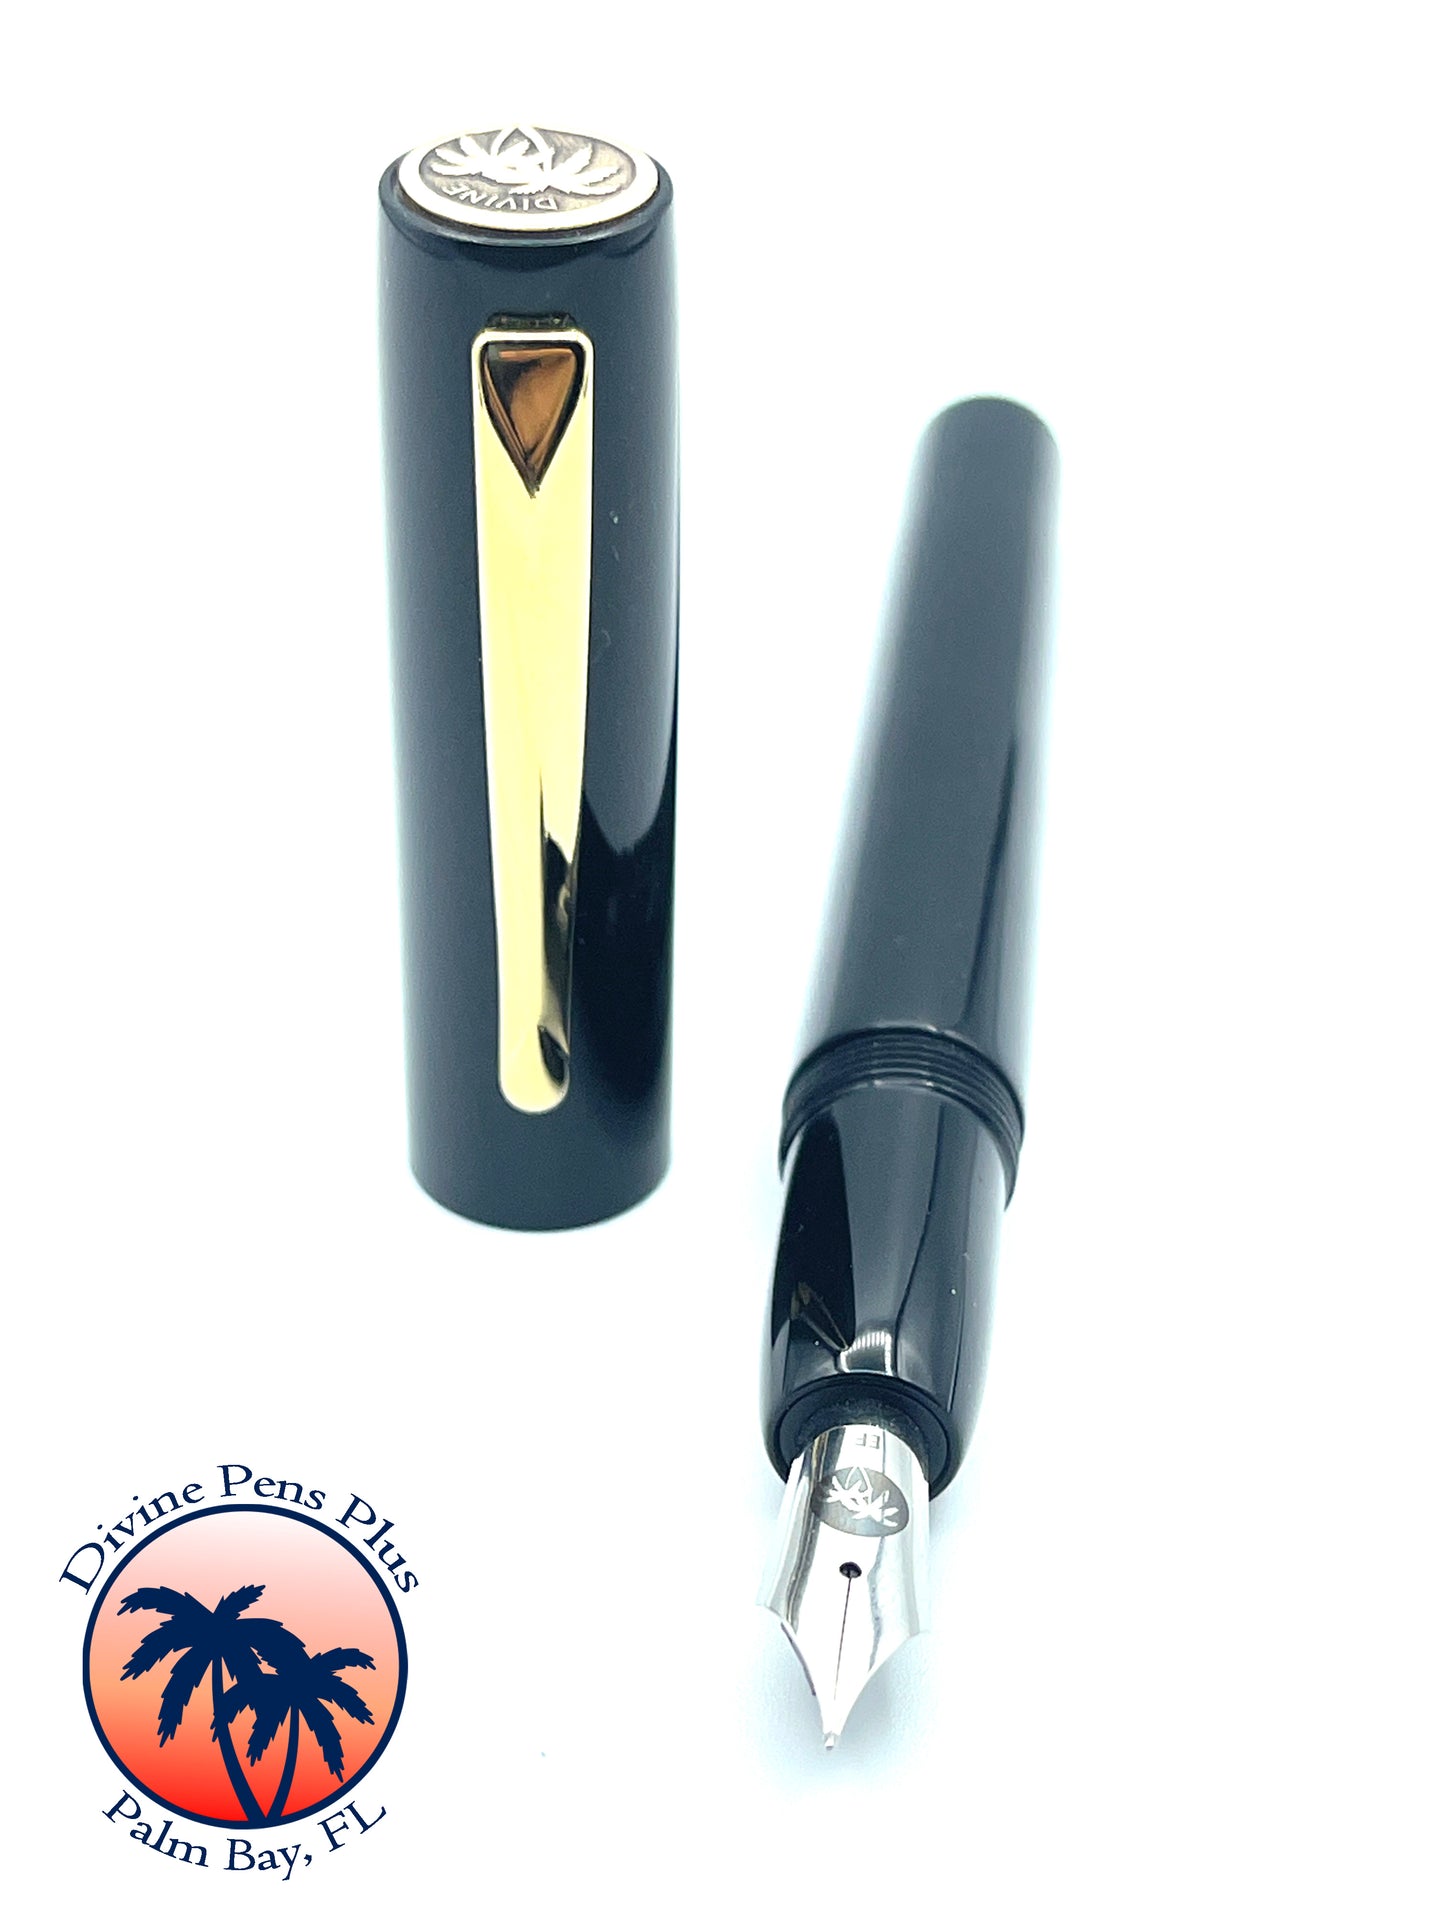 Agape Fountain Pen - "Carbon Black"